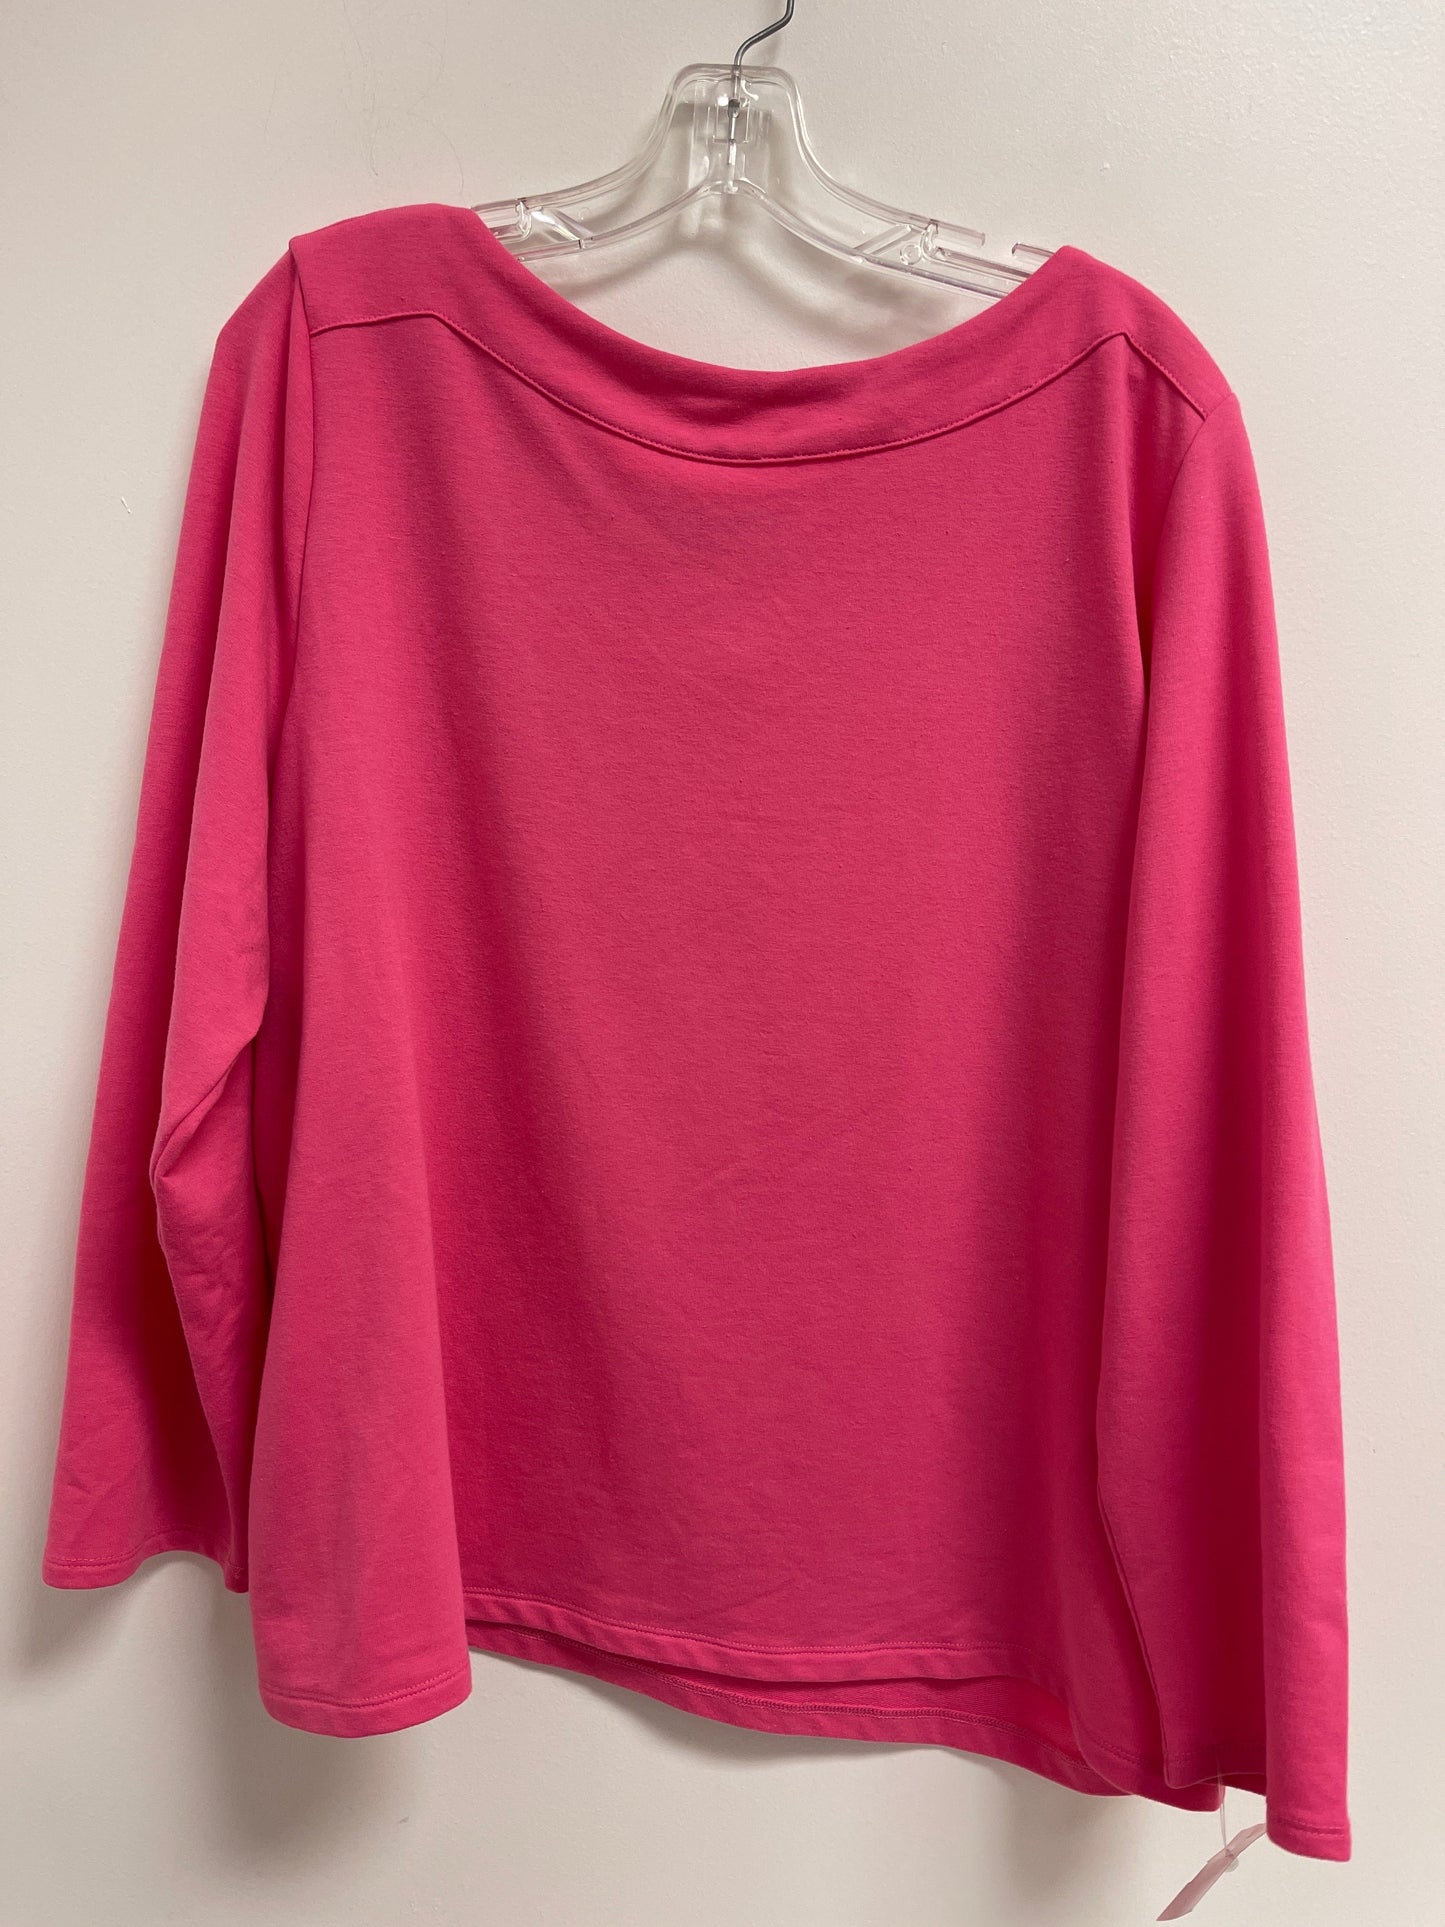 Pink Top Long Sleeve Rafaella, Size L